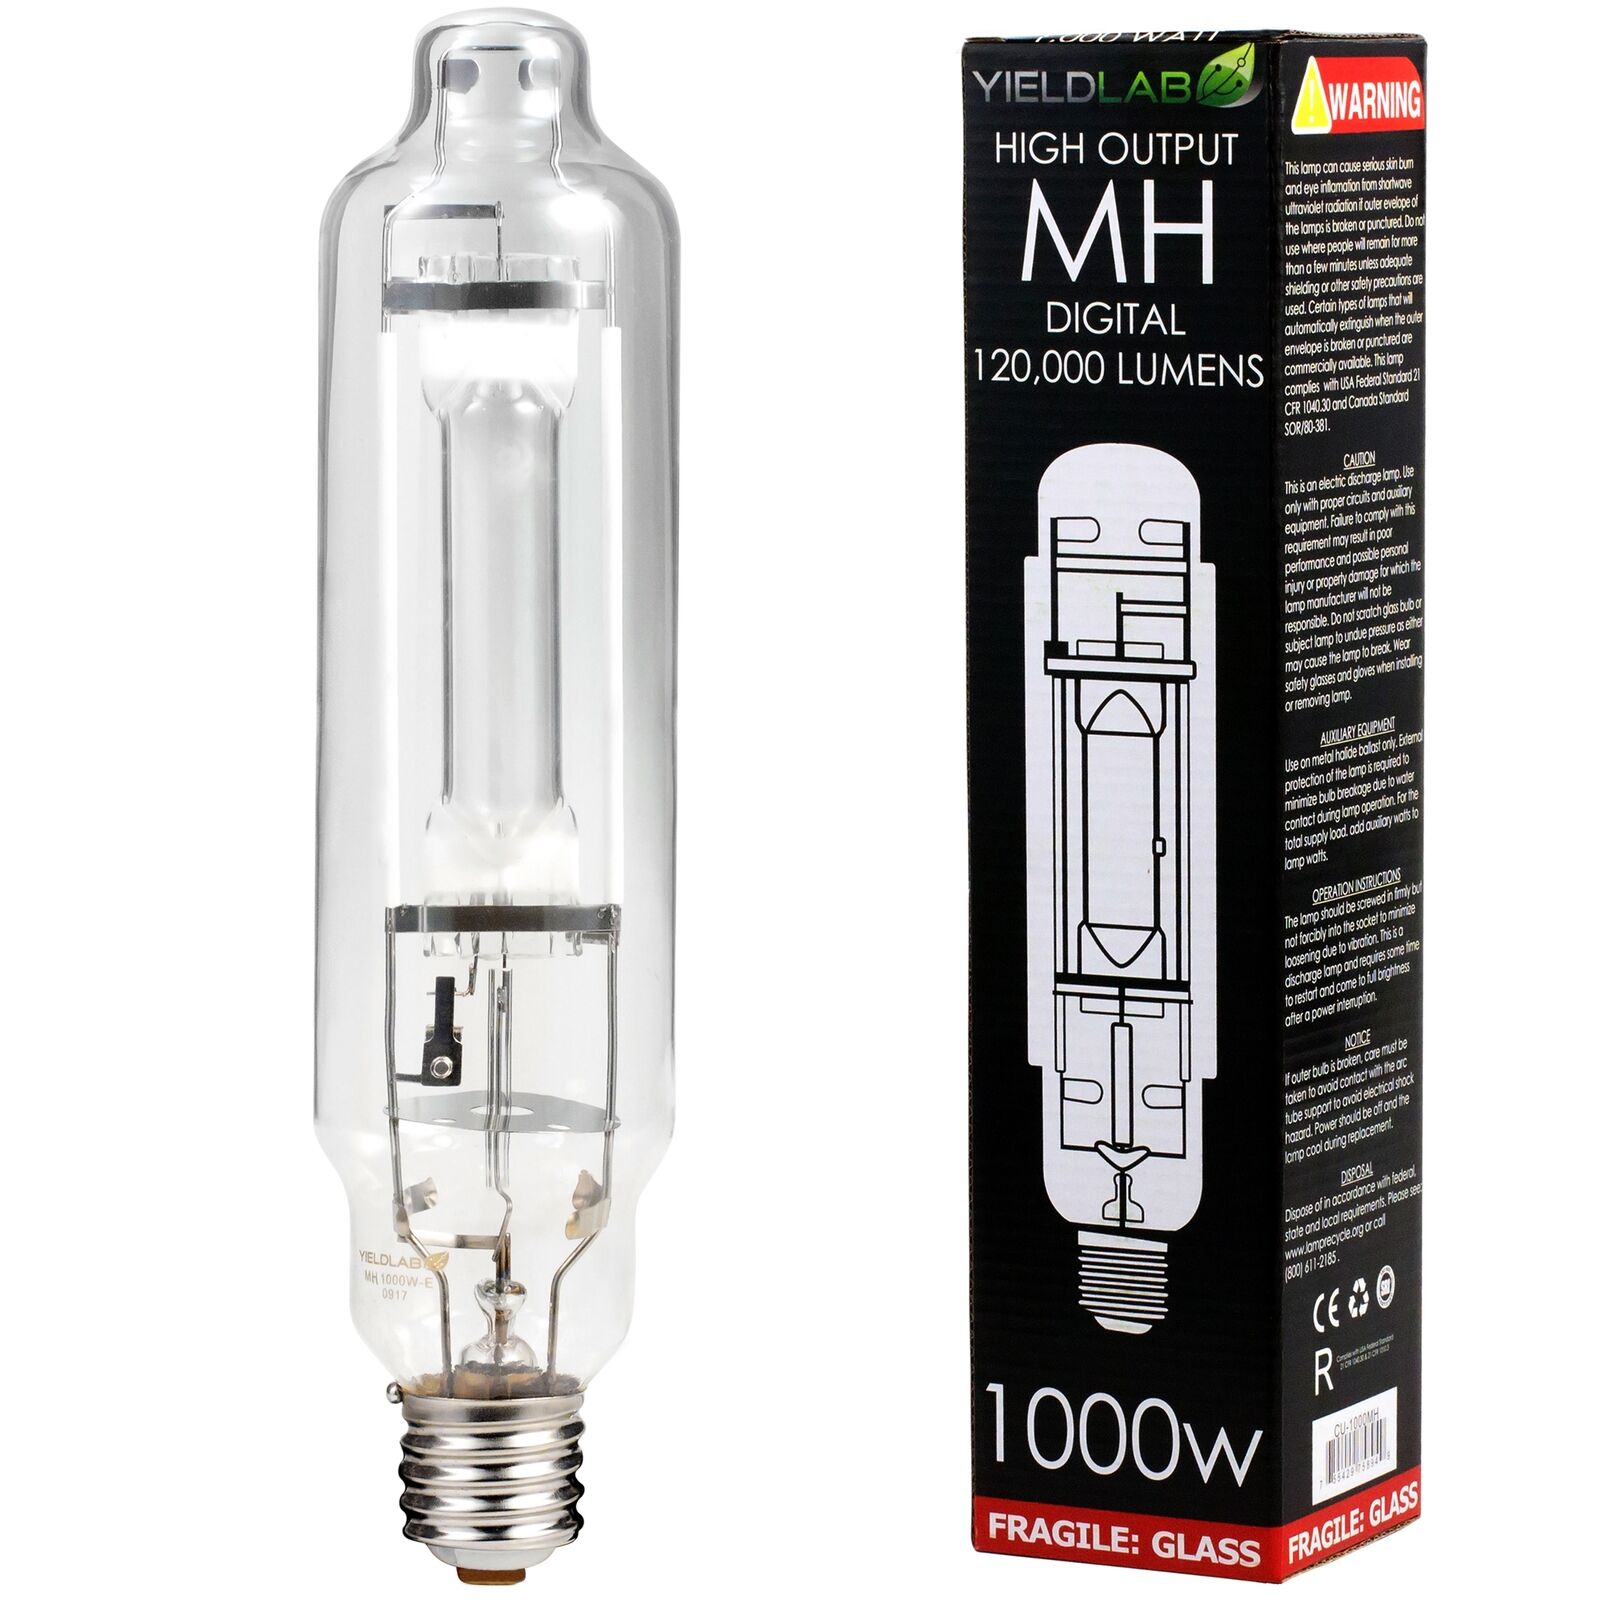 Yield Lab MH 1000w DIGITAL hid 1000 WATT W Metal Halide Veg Grow Light Bulb